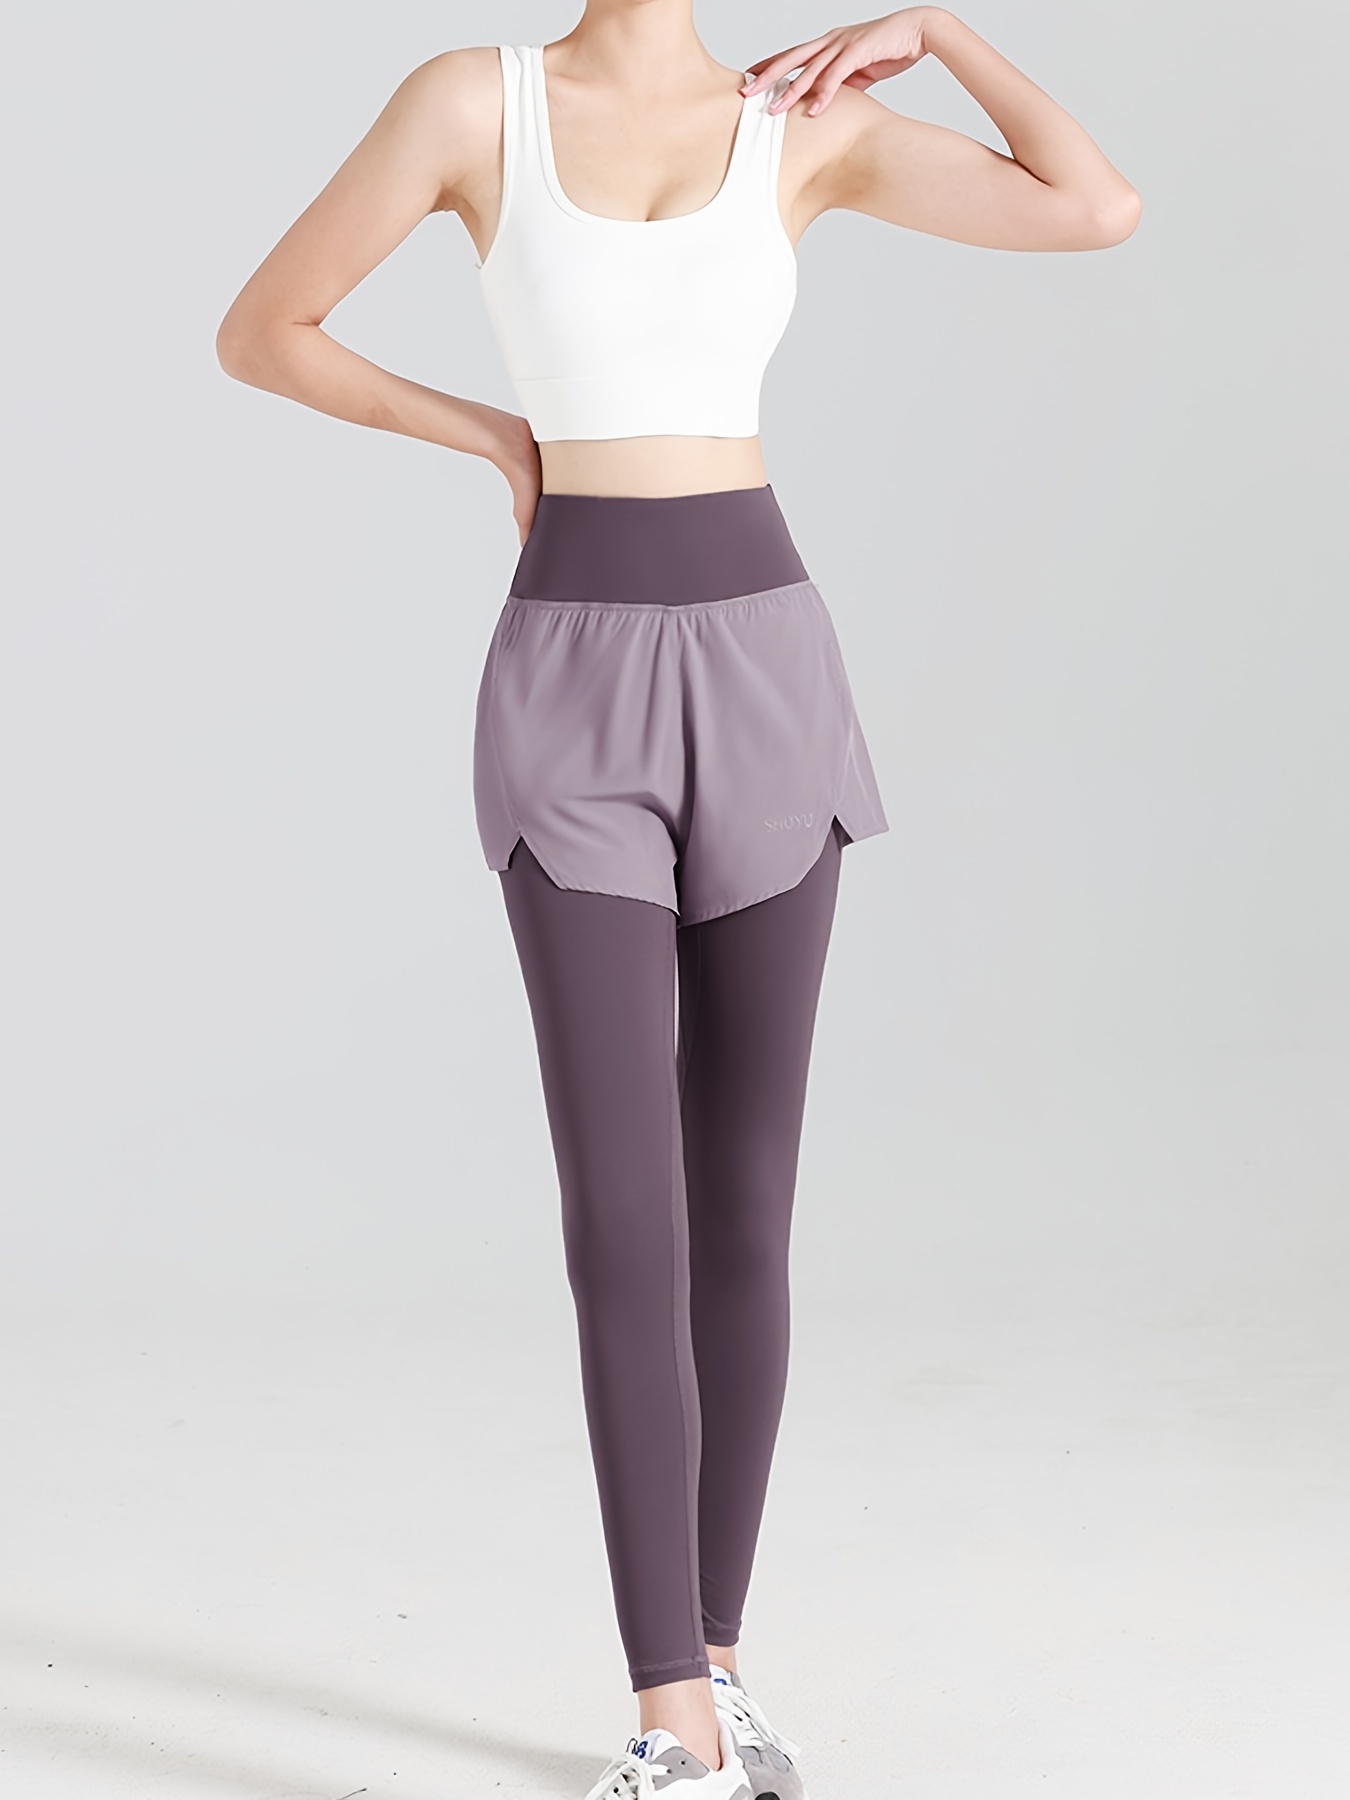 Pants de Yoga para Mujer Talla Adulto Pilates Gimnasio 6 Colores